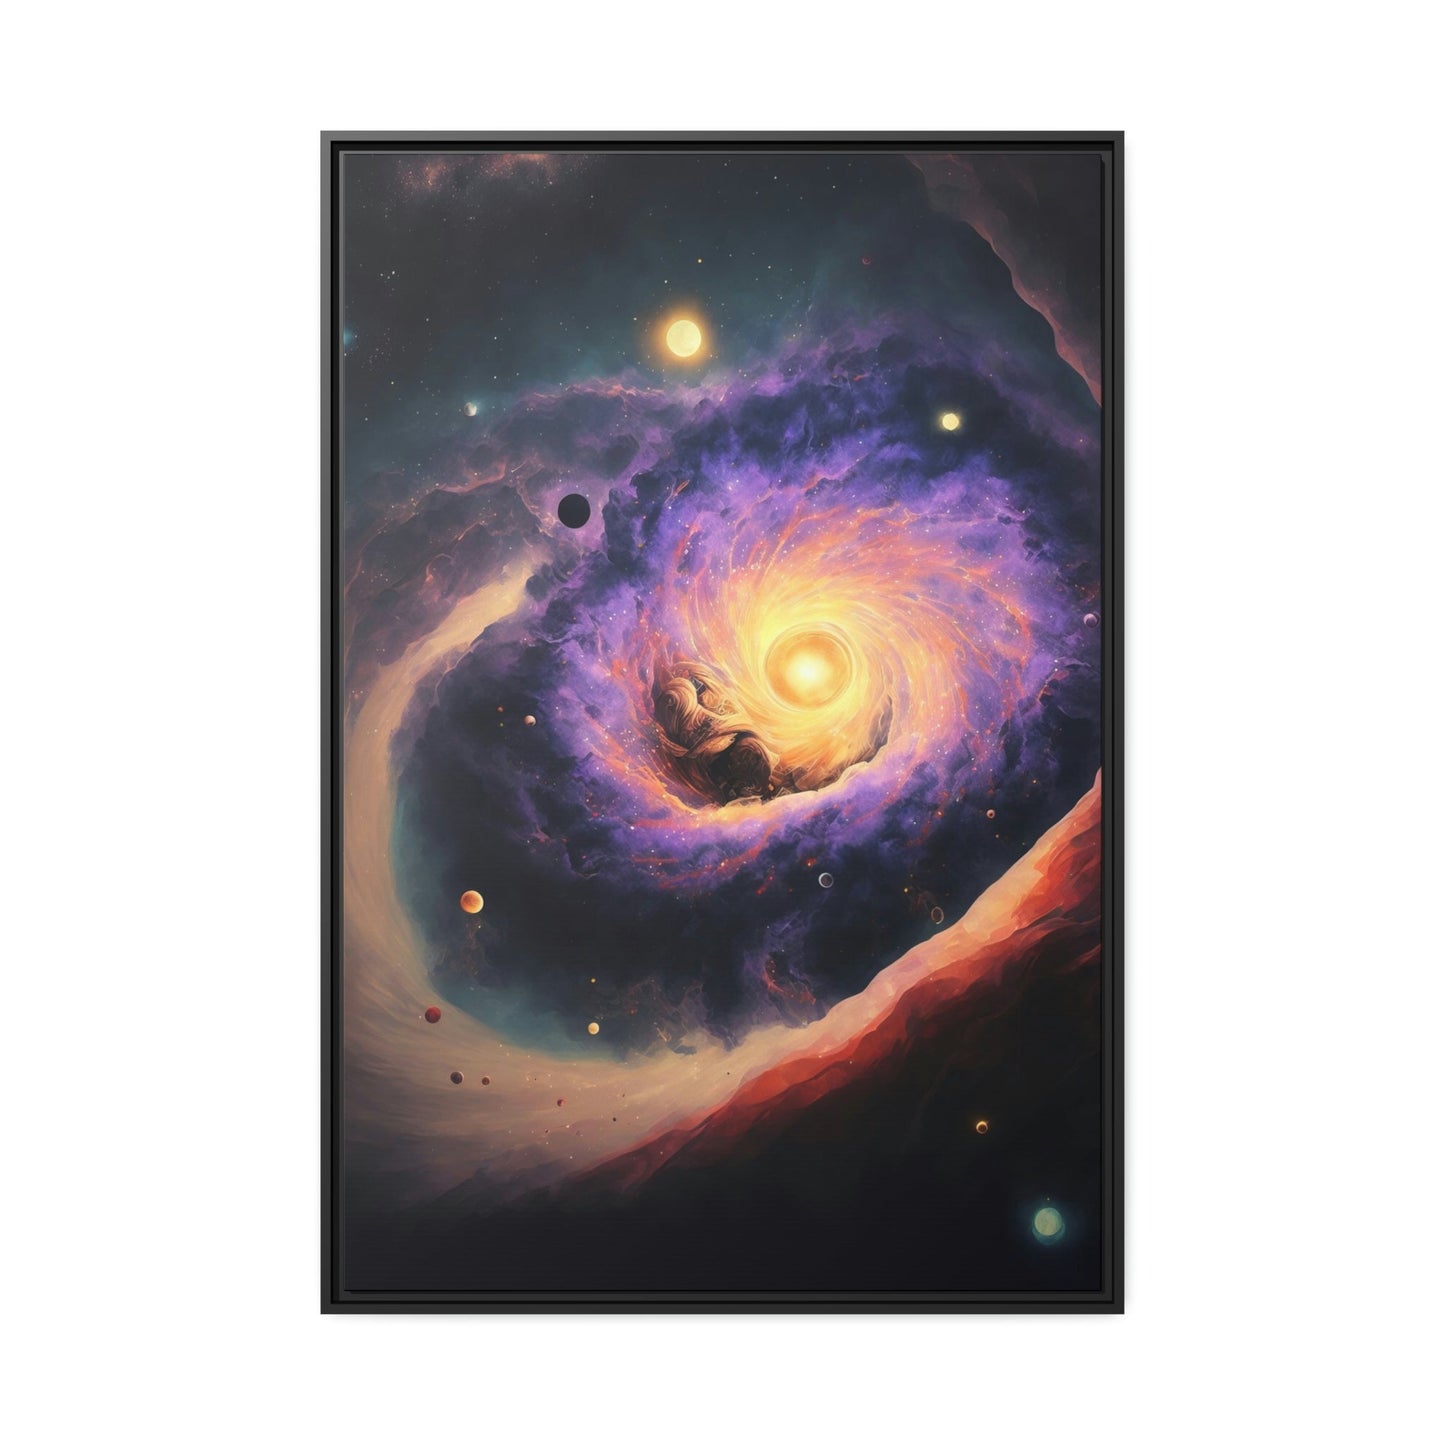 Nebulae Dreams: A Galactic Reverie